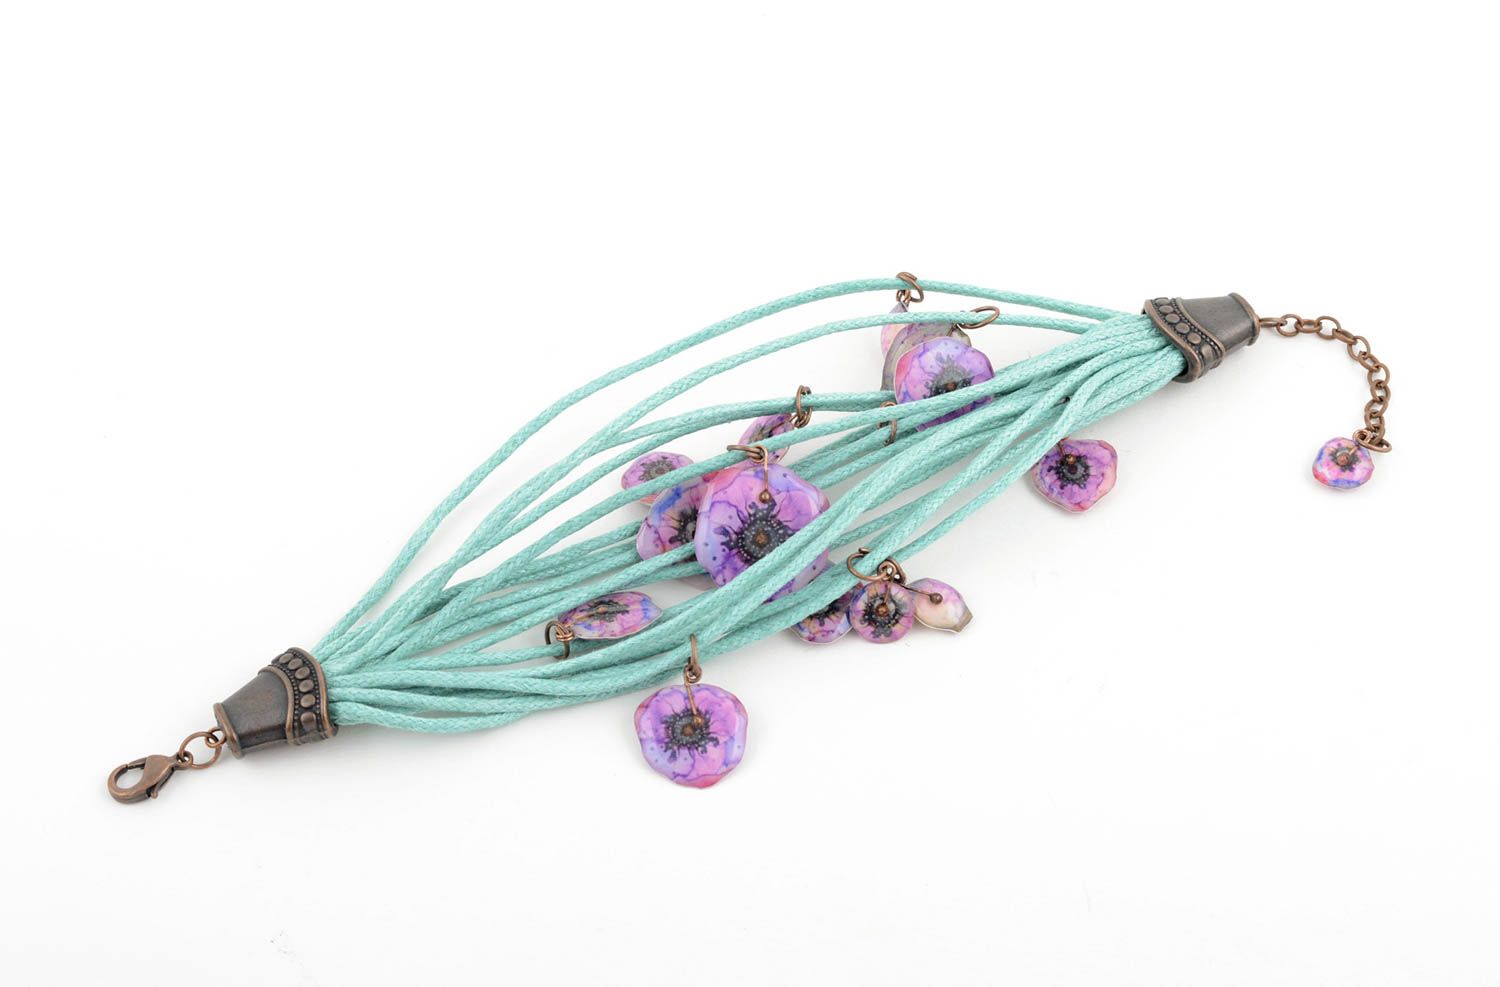 Unusual handmade woven cord bracelet wrist bracelet designs accessories for girl photo 1